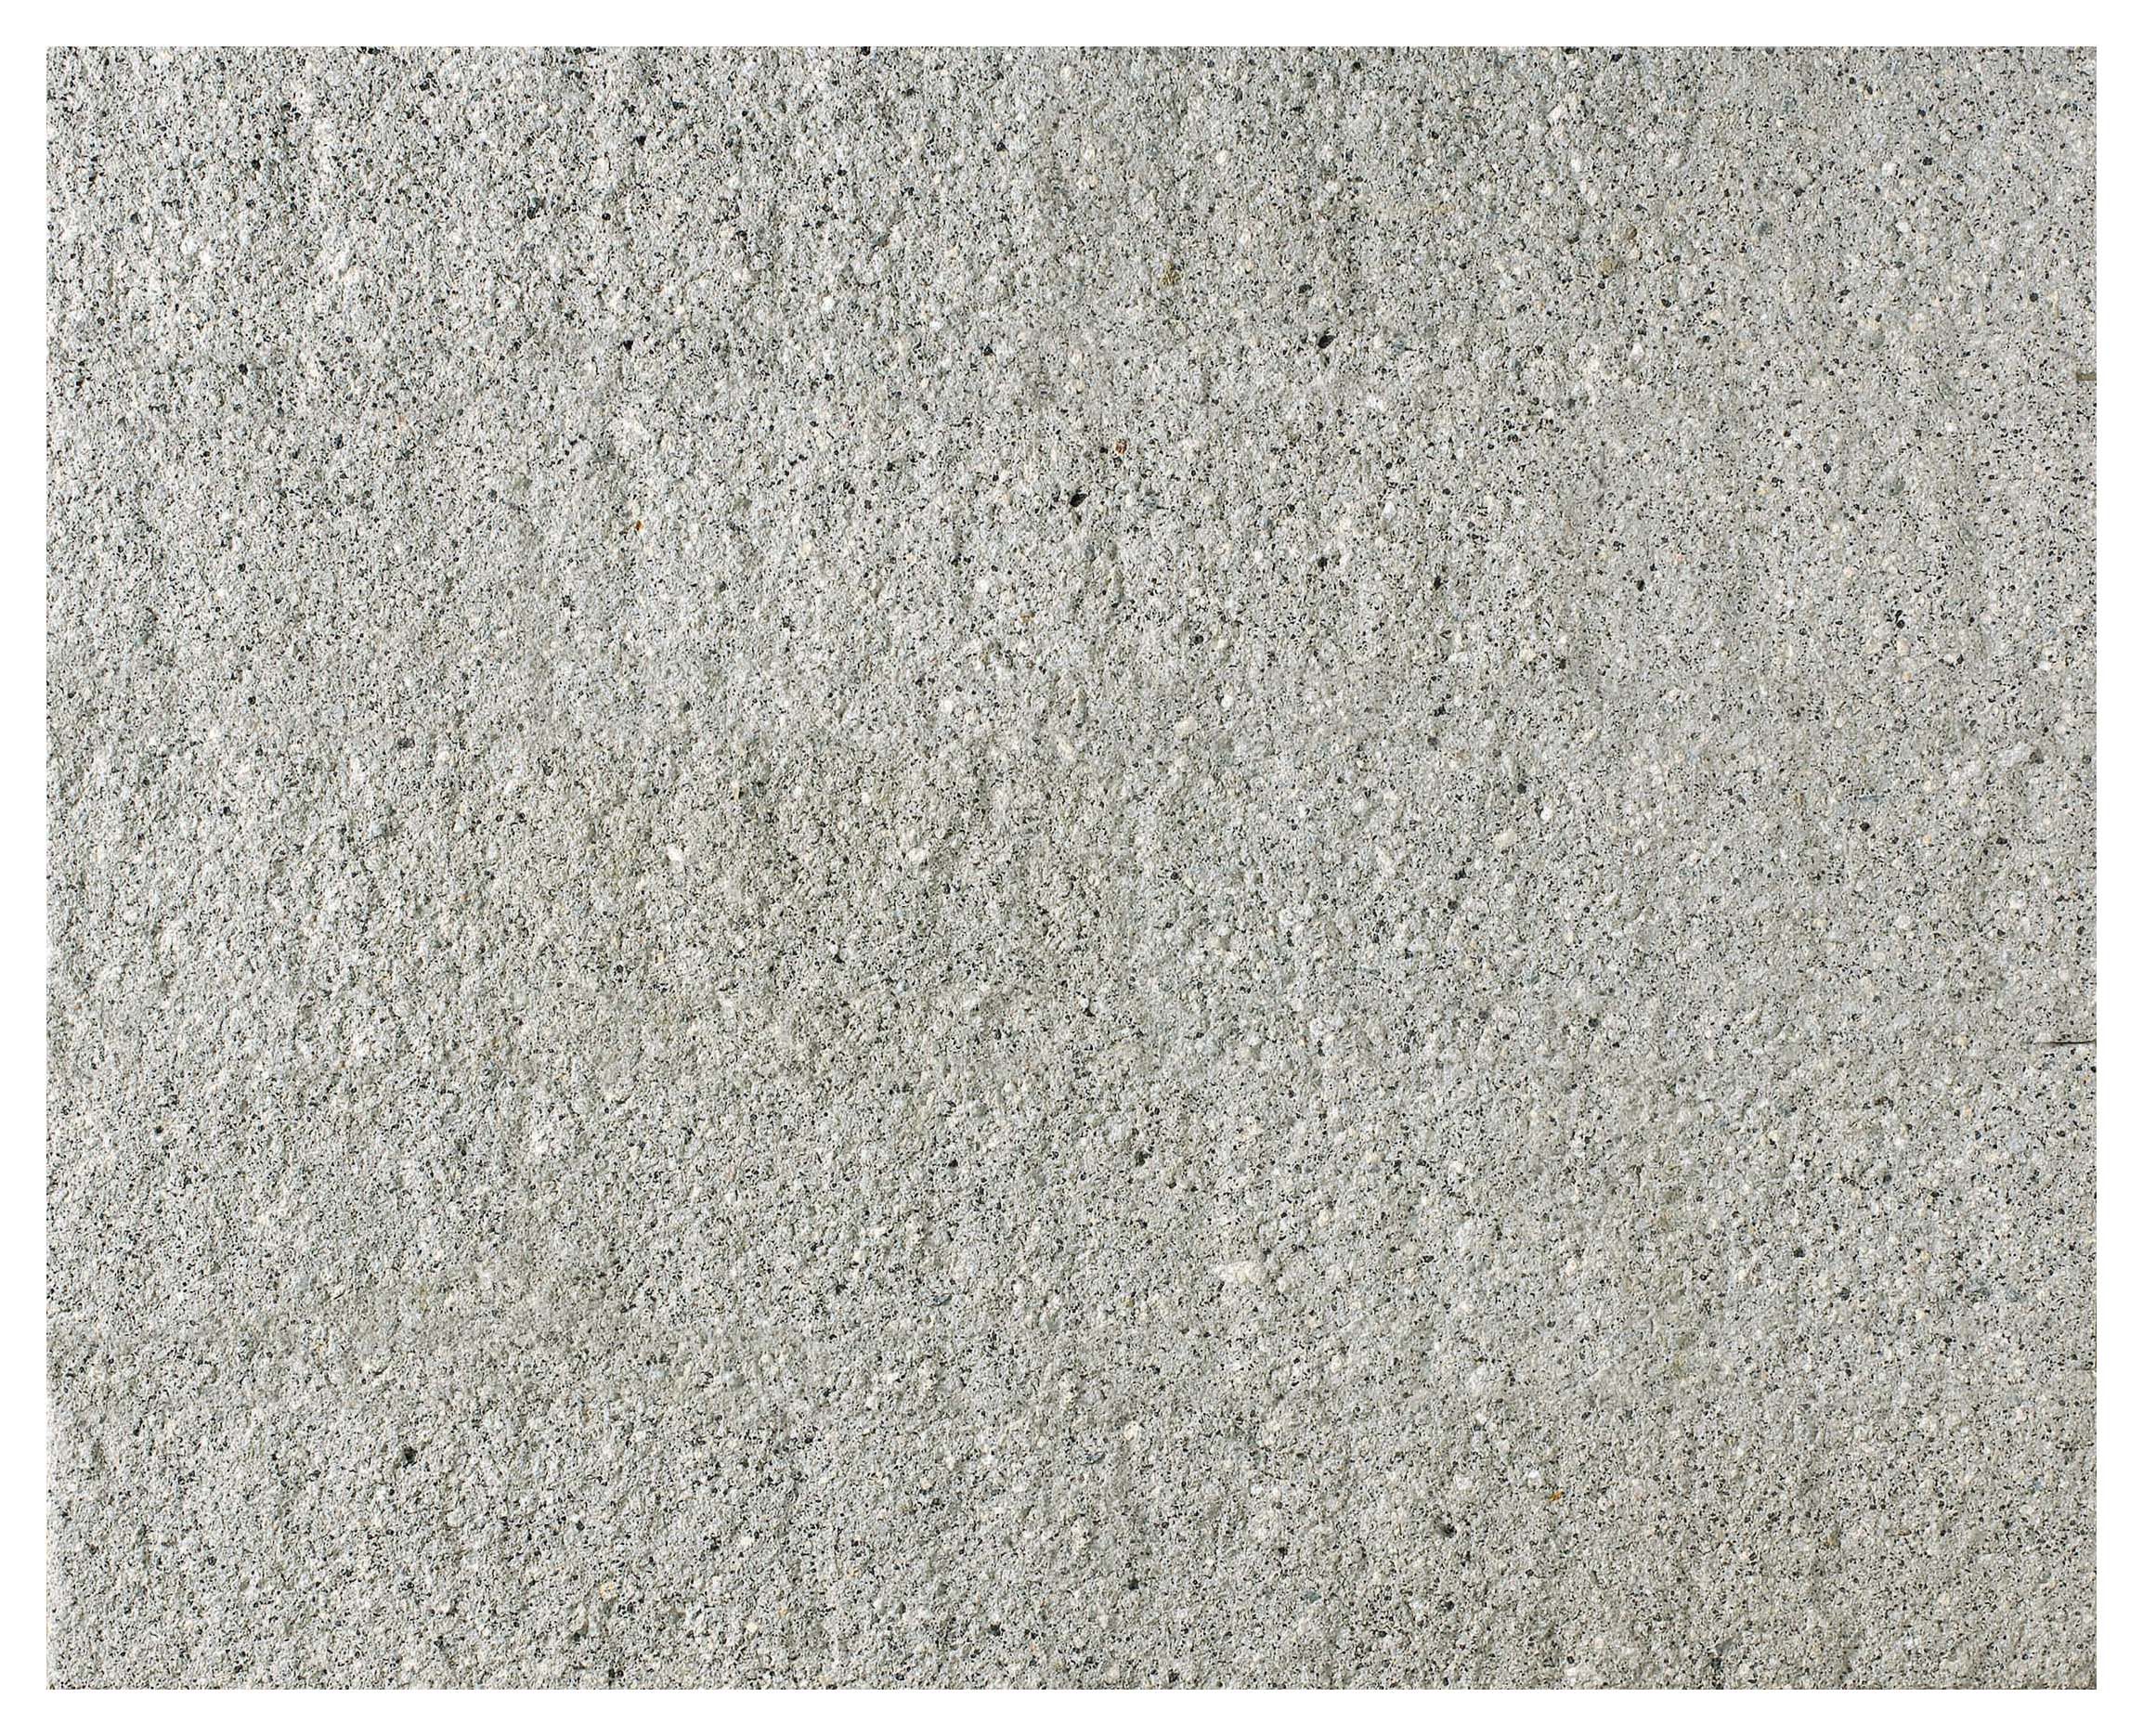 Marshalls Argent Light Grey Coarse Walling Stone - Sample